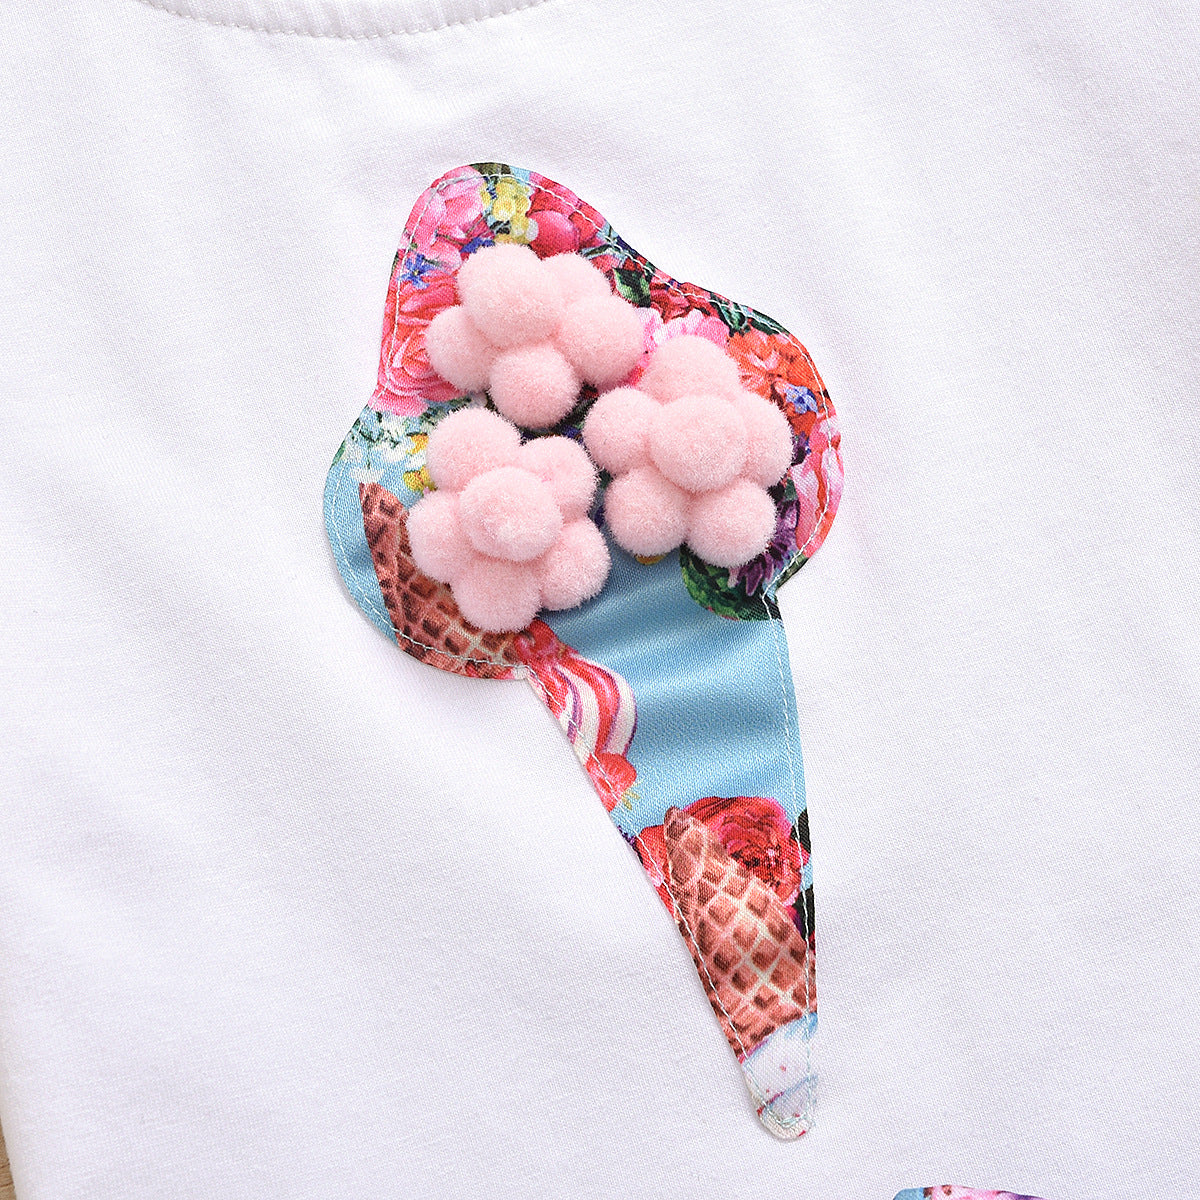 Carmina Ice Cream Printed Shirt & Floral Fishtail Skirt